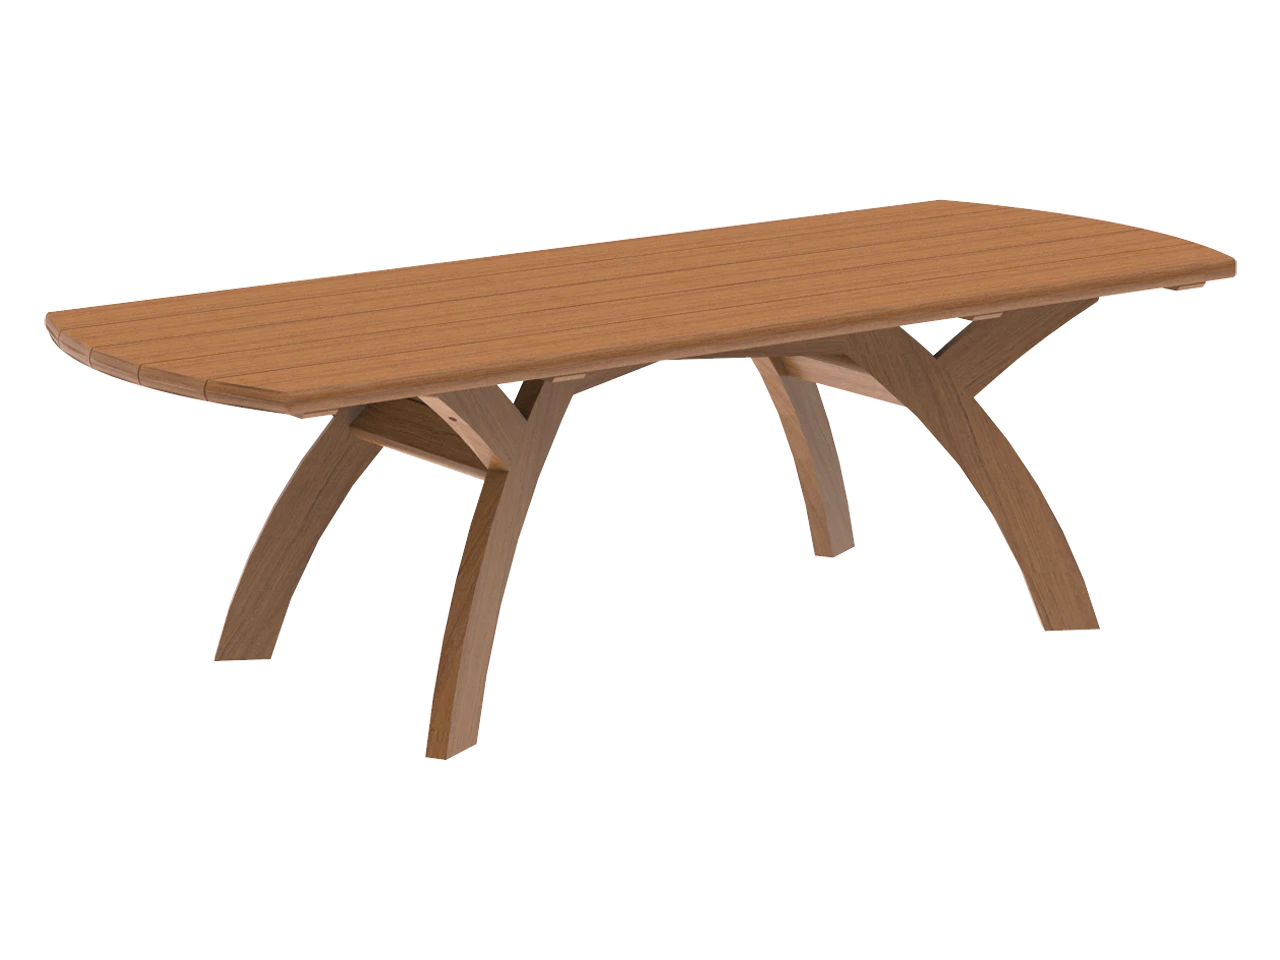 Alexander Rose Sorrento Table 2.4m x 1.0m